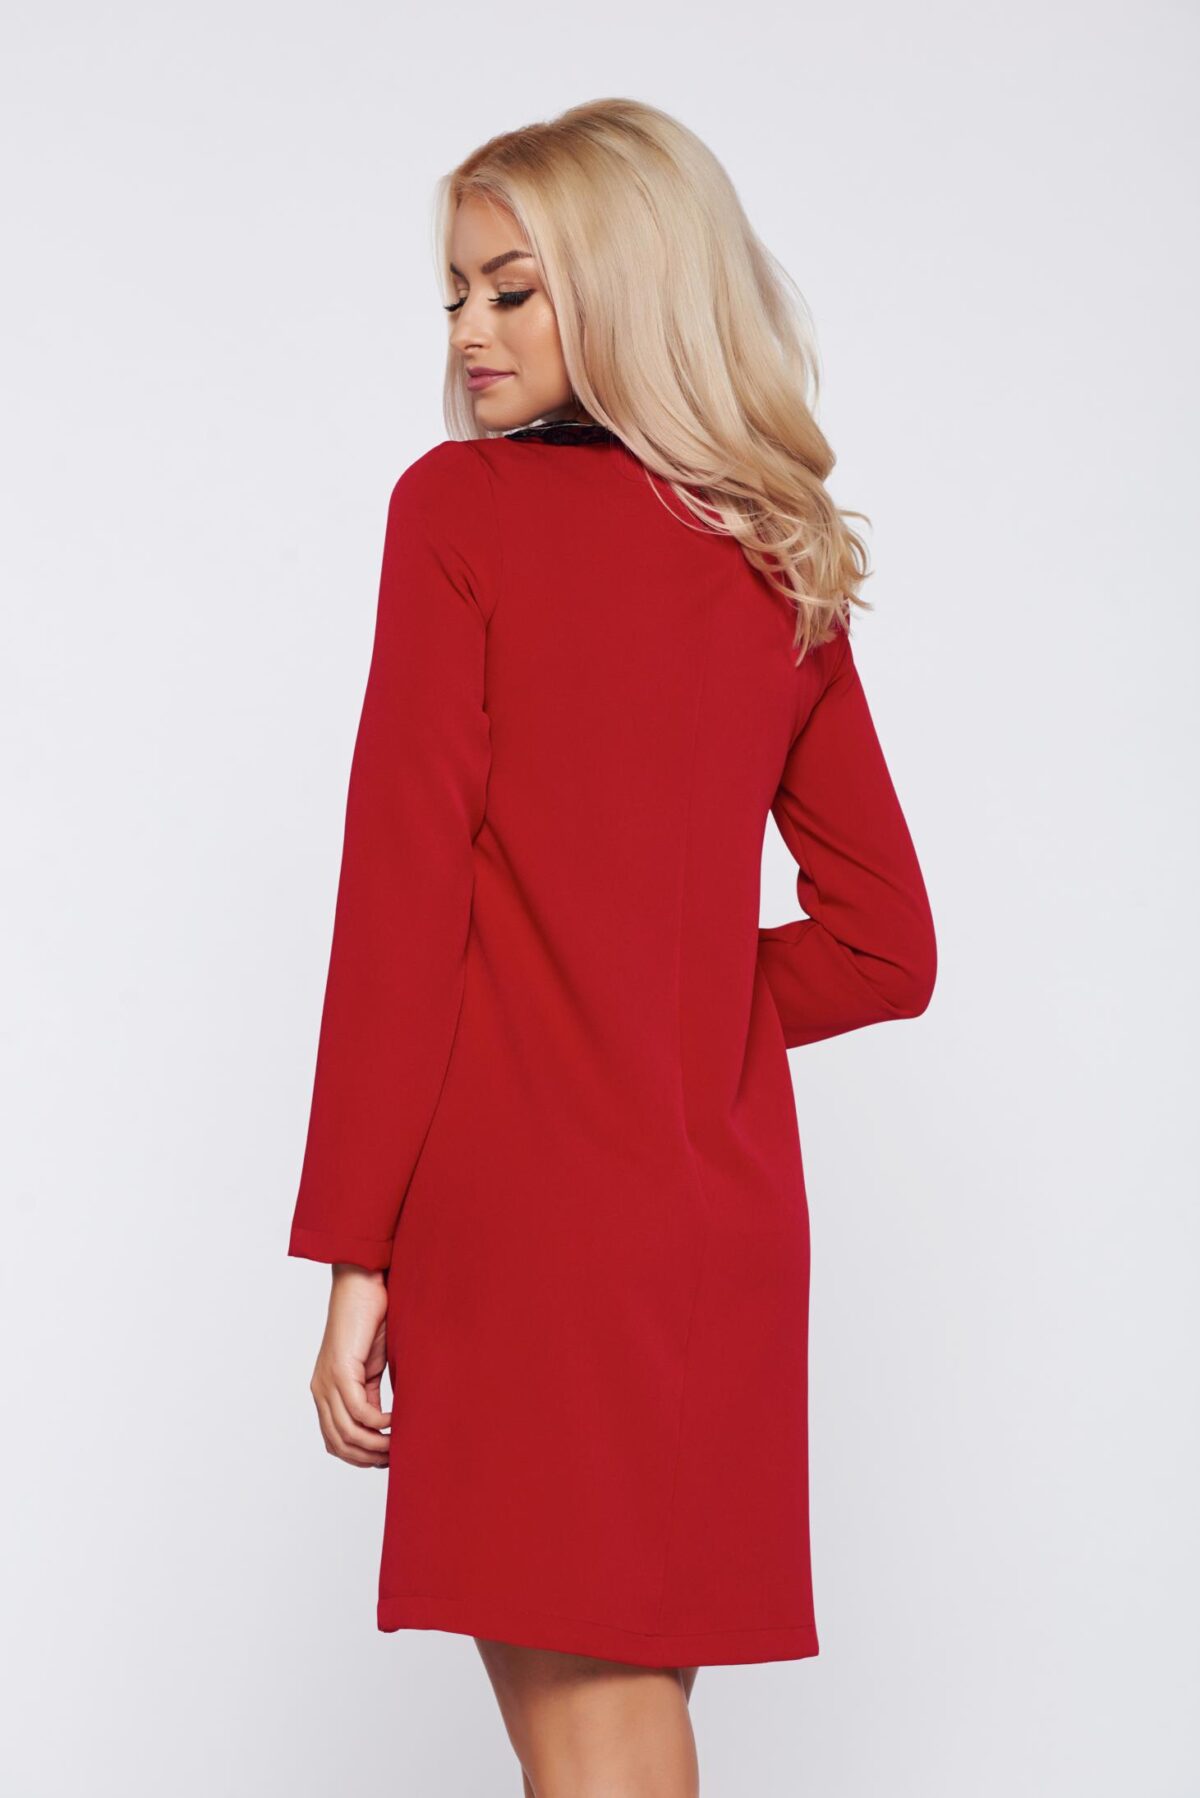 Easy Cut Red Elegant Daily Dress